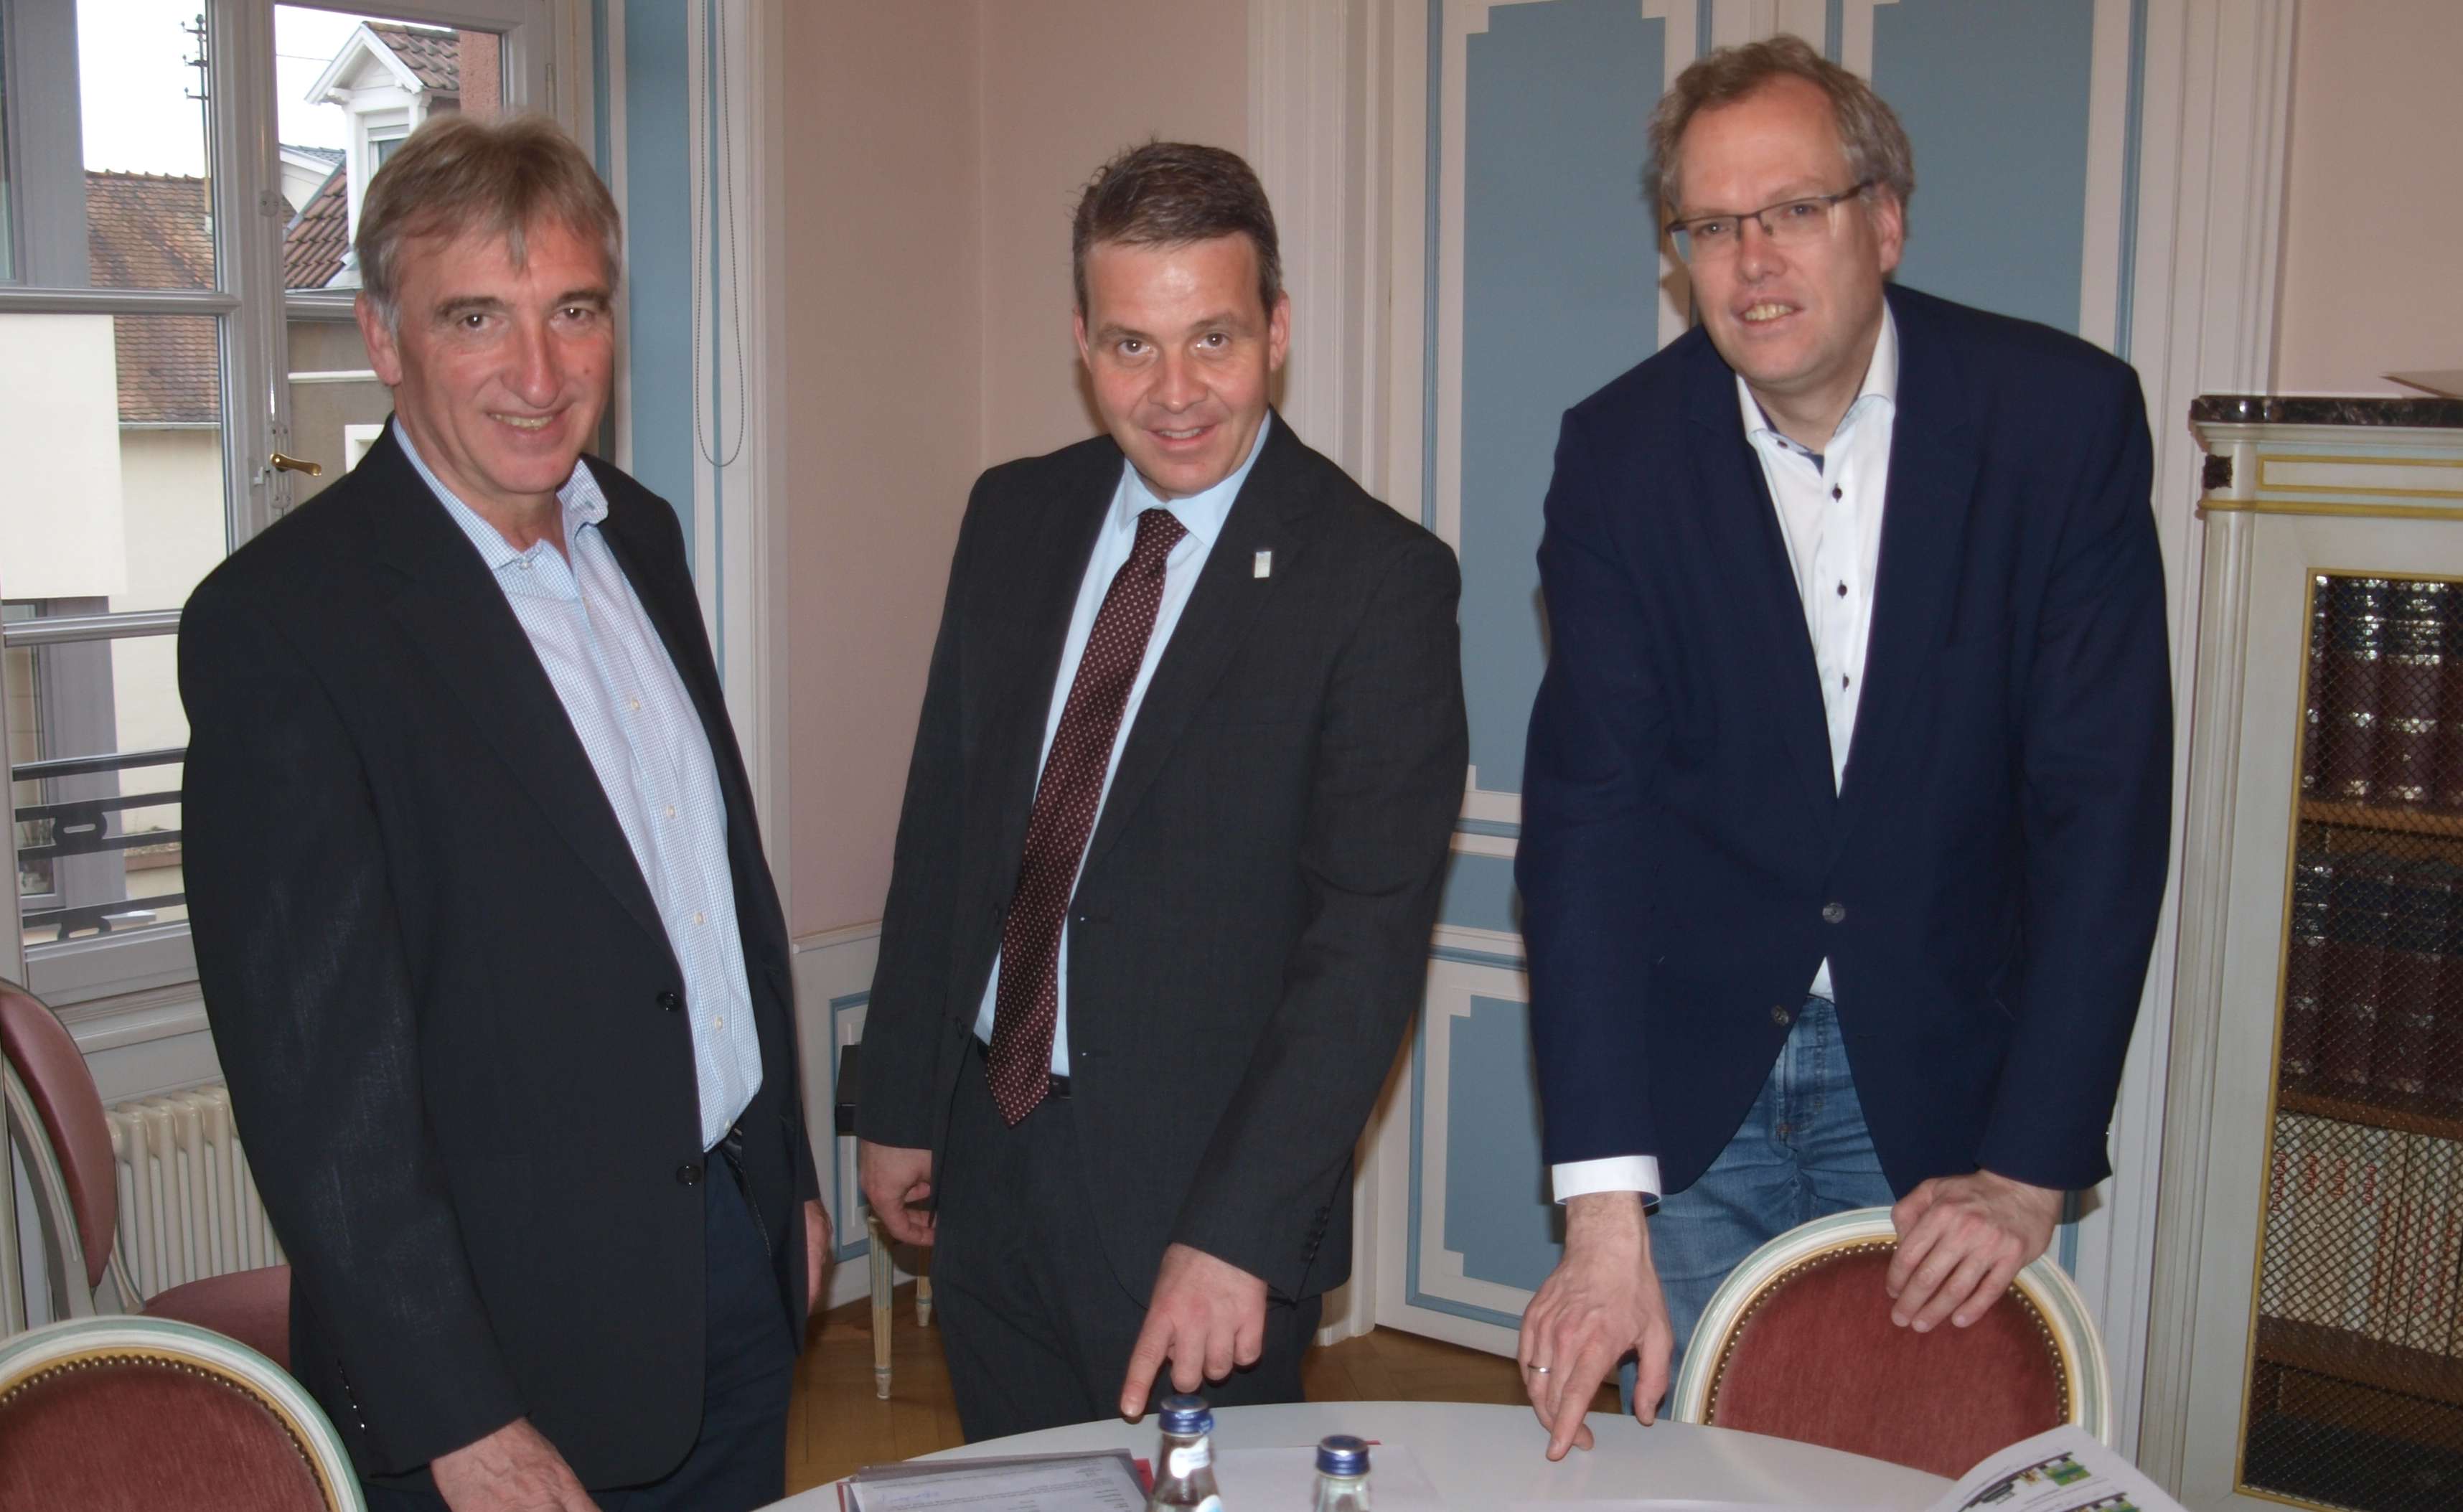  v.l.n.r.: Karl Klein (MdL), Oberbürgermeister Hans D. Reinwald und Dr. Albrecht Schütte (MdL) 